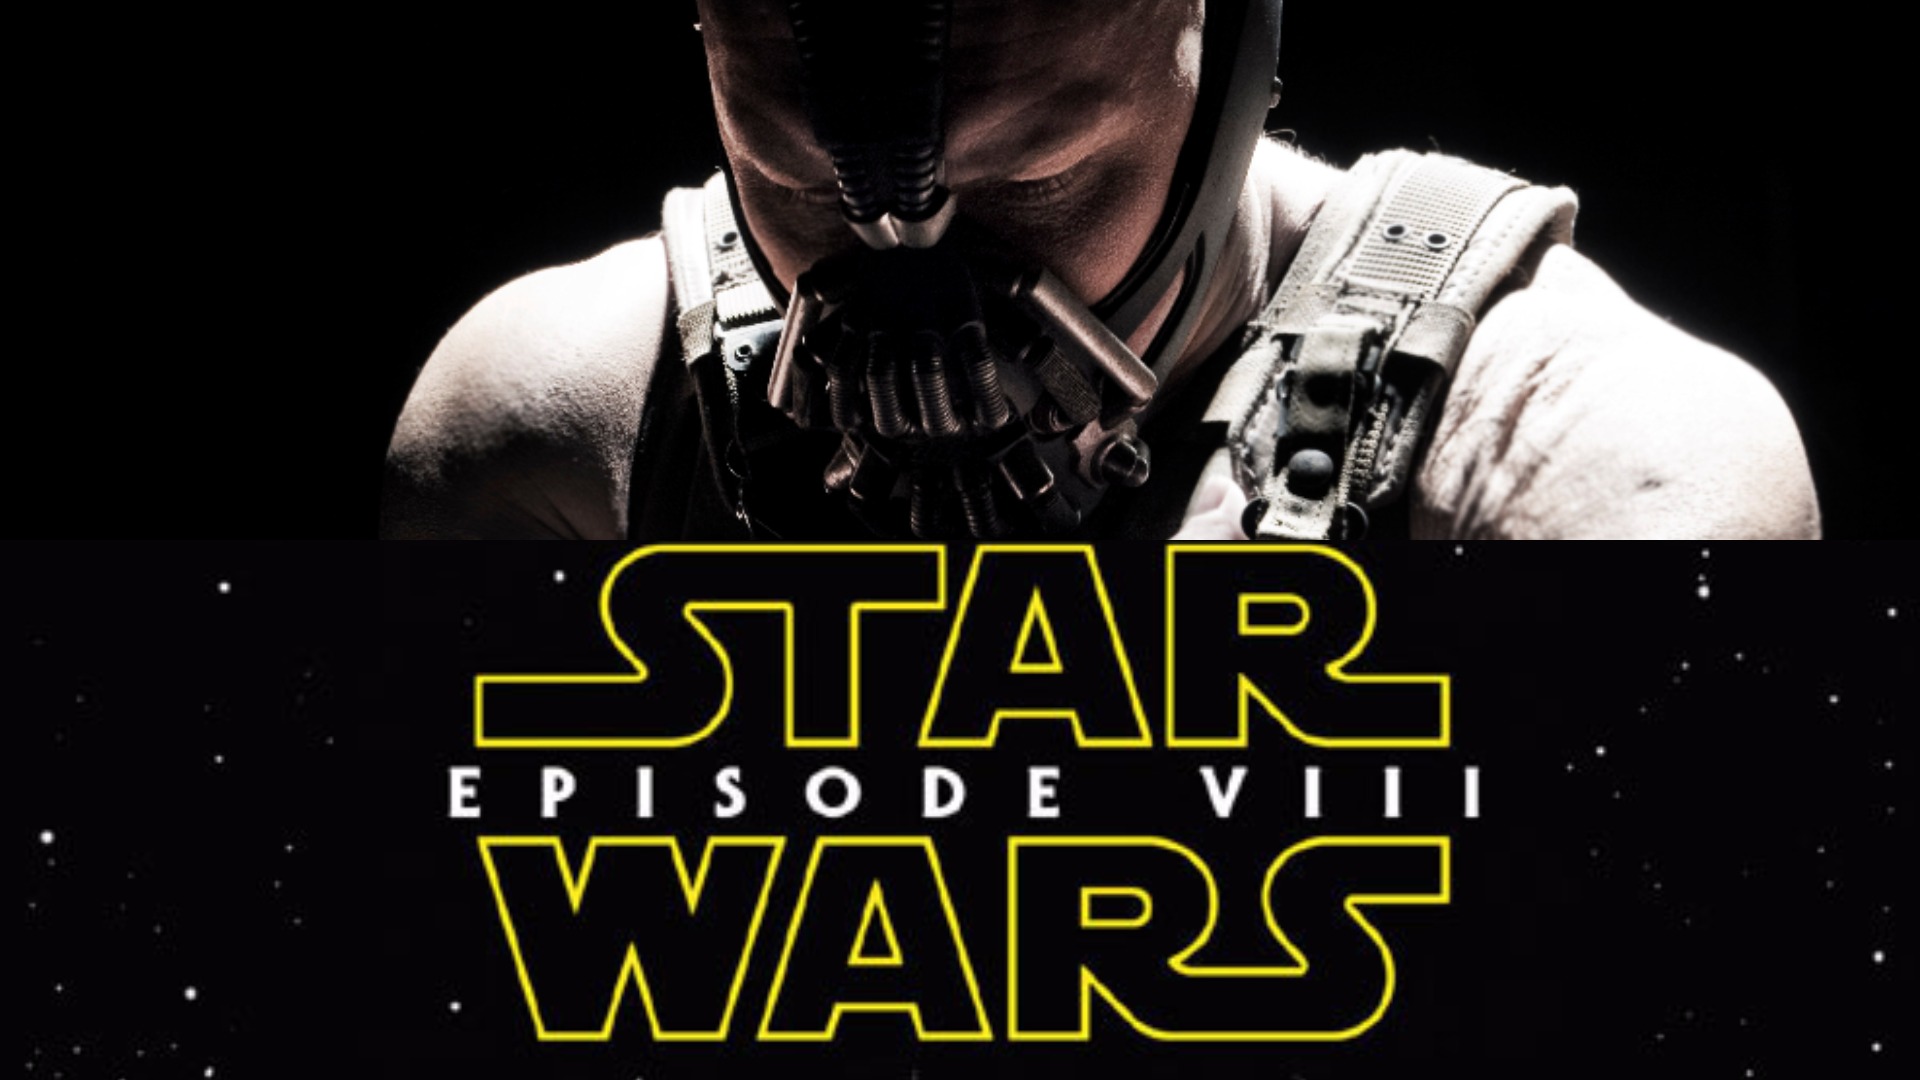 Tom Hardy's role in Star Wars VIII revealed